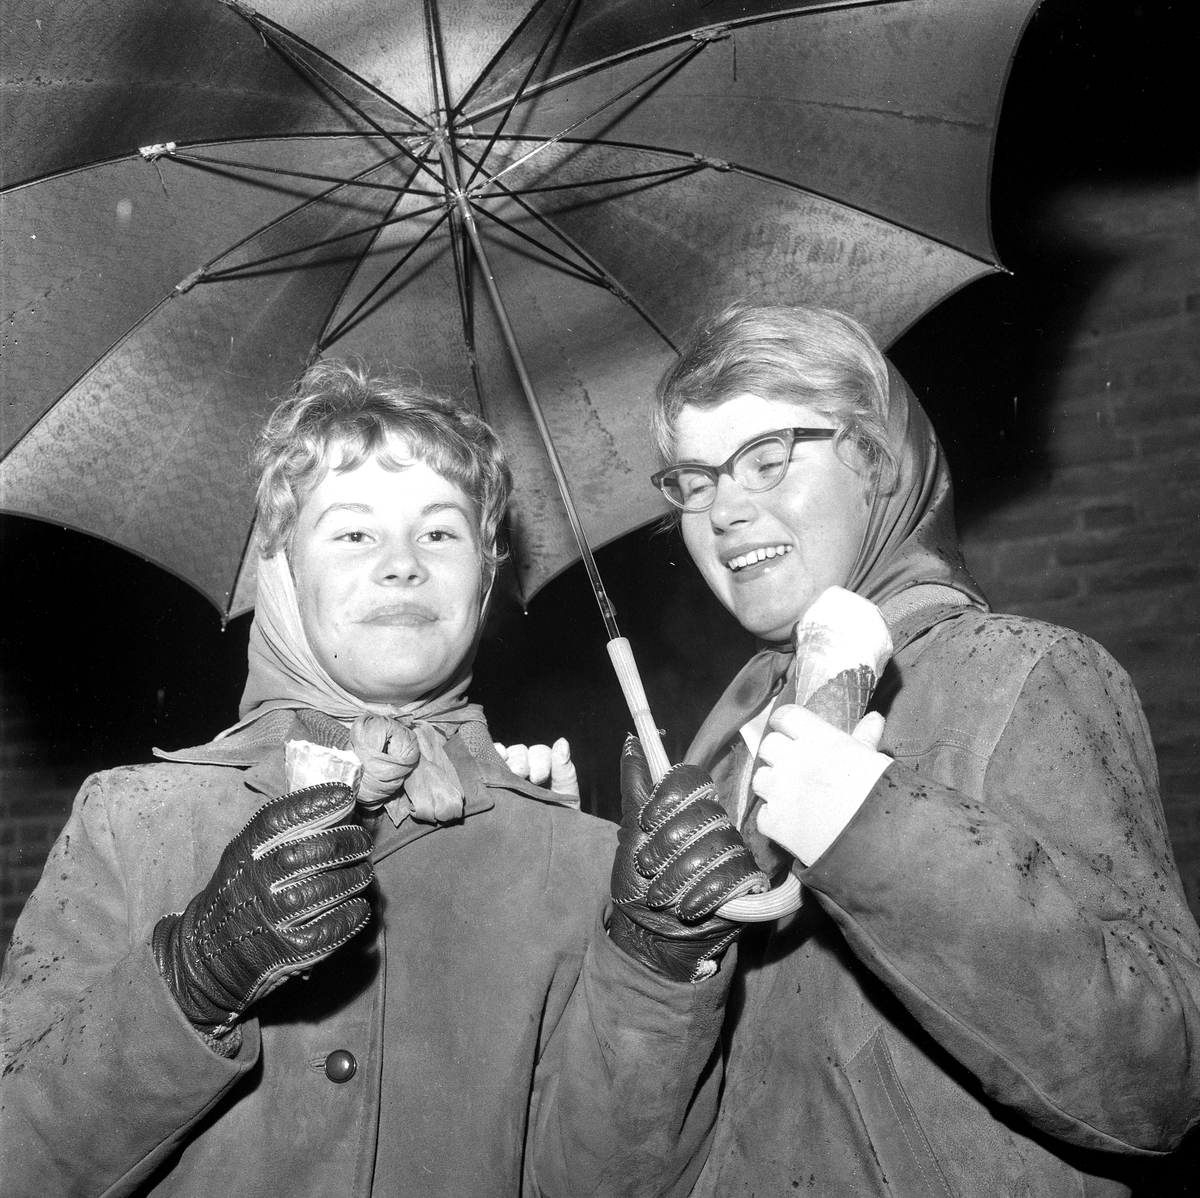 Glass i regnväder.
22 oktober 1958.